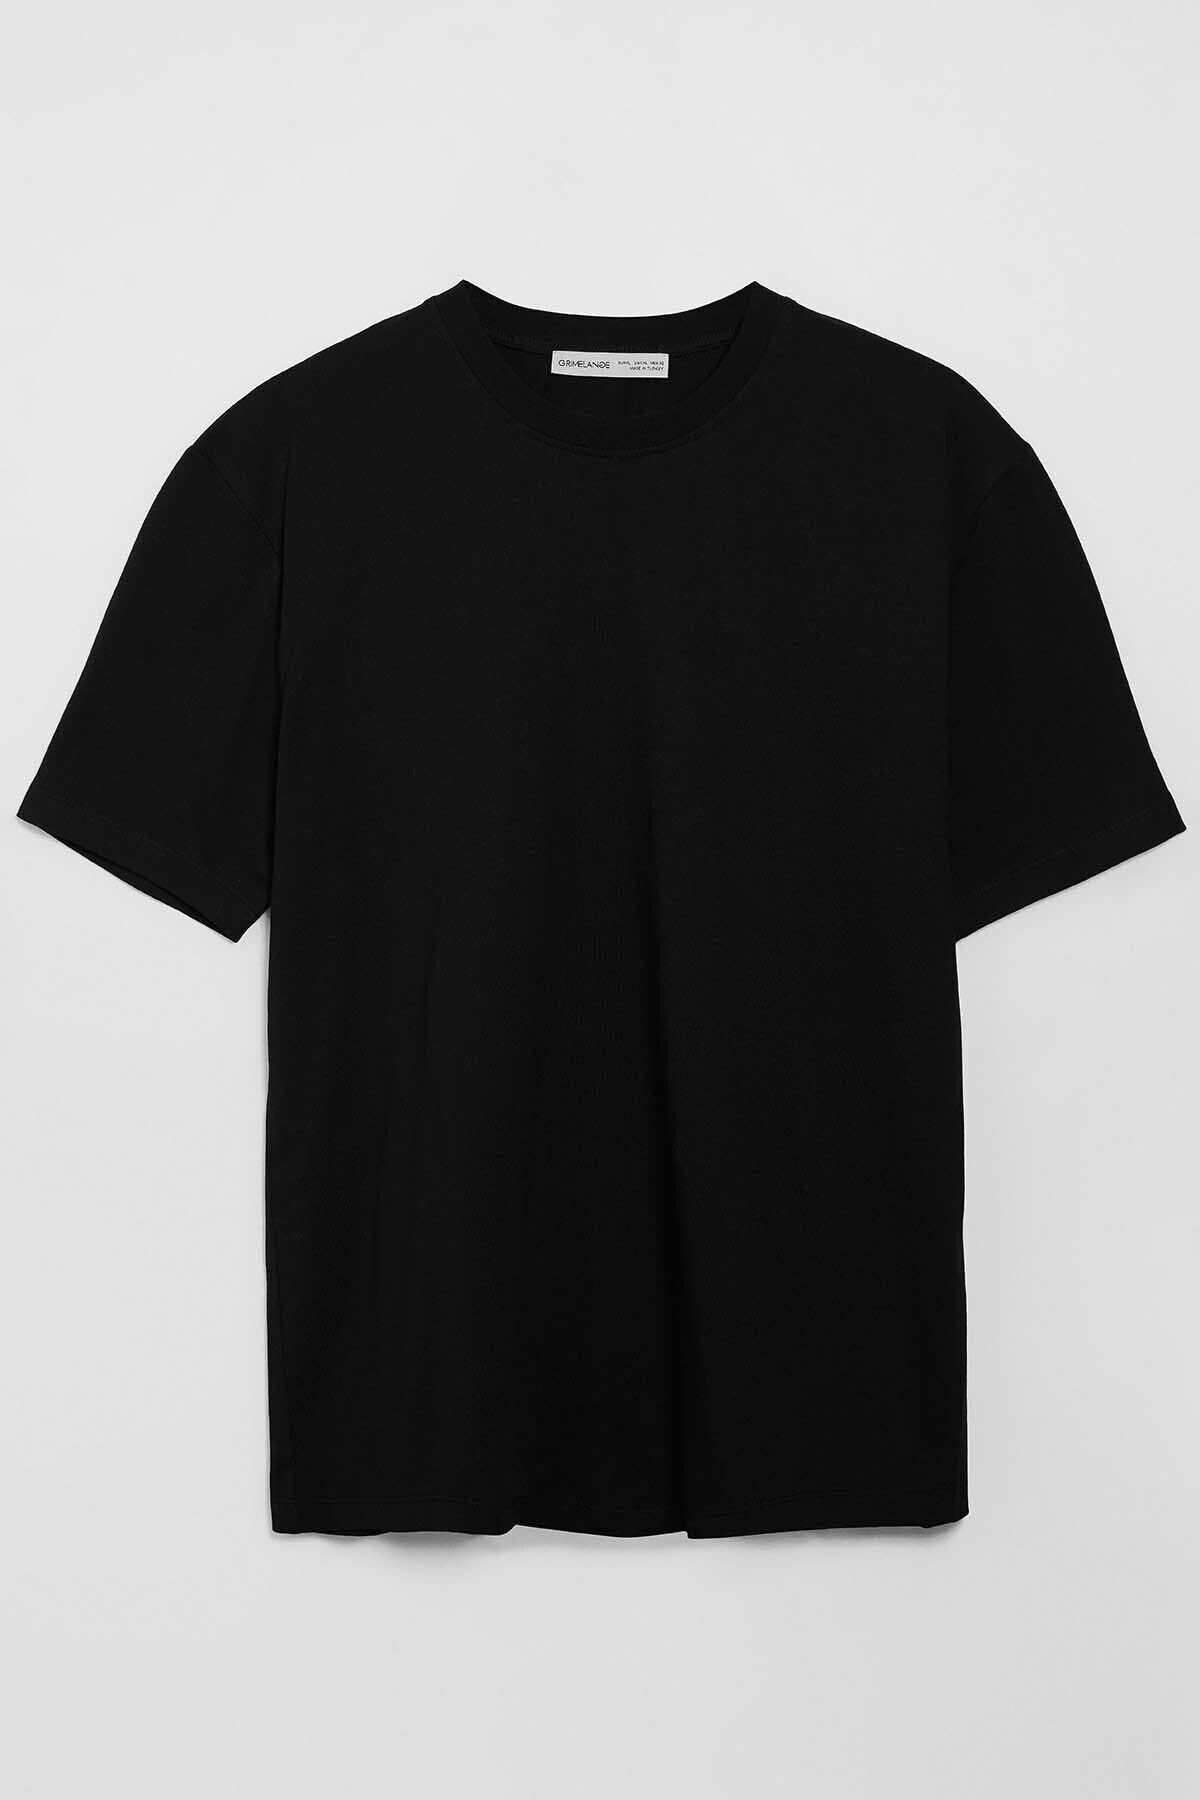 GRIMELANGE Solo Erkek Comfort Fit Kalın Dokulu Siyah T-shirt